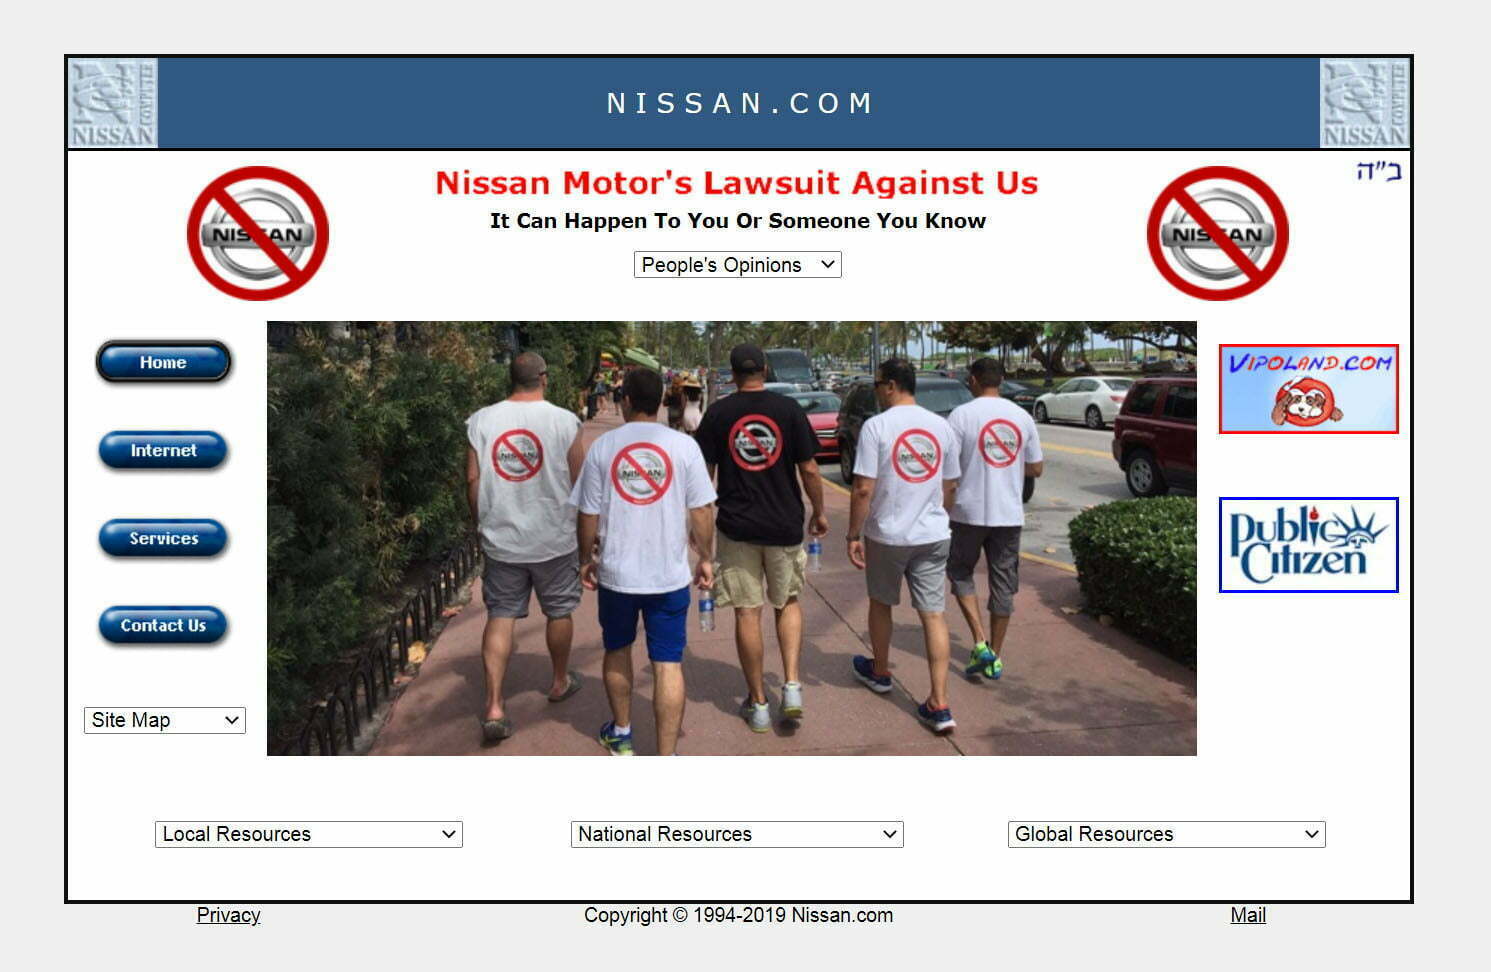 אתר האינטרנט של עוזי ניסן, Nissan.com